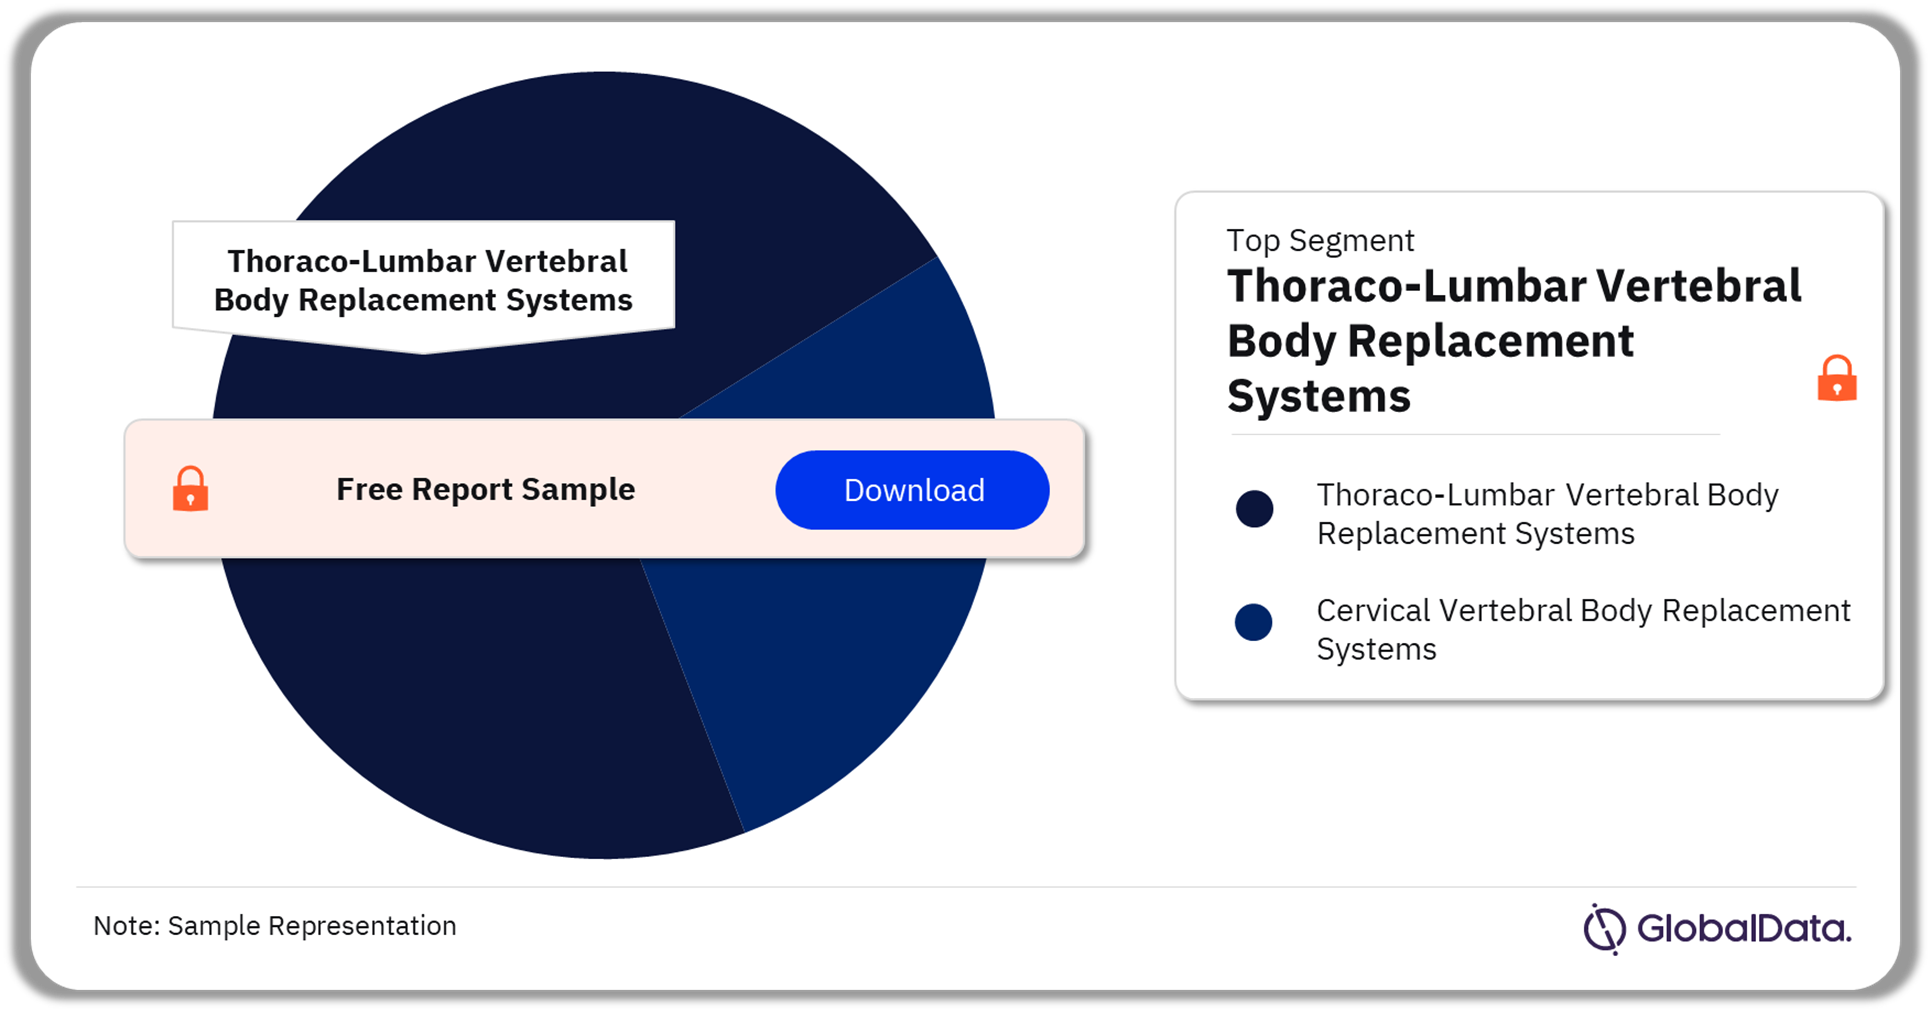 VBR Systems Market Analysis by Segments, 2023 (%)